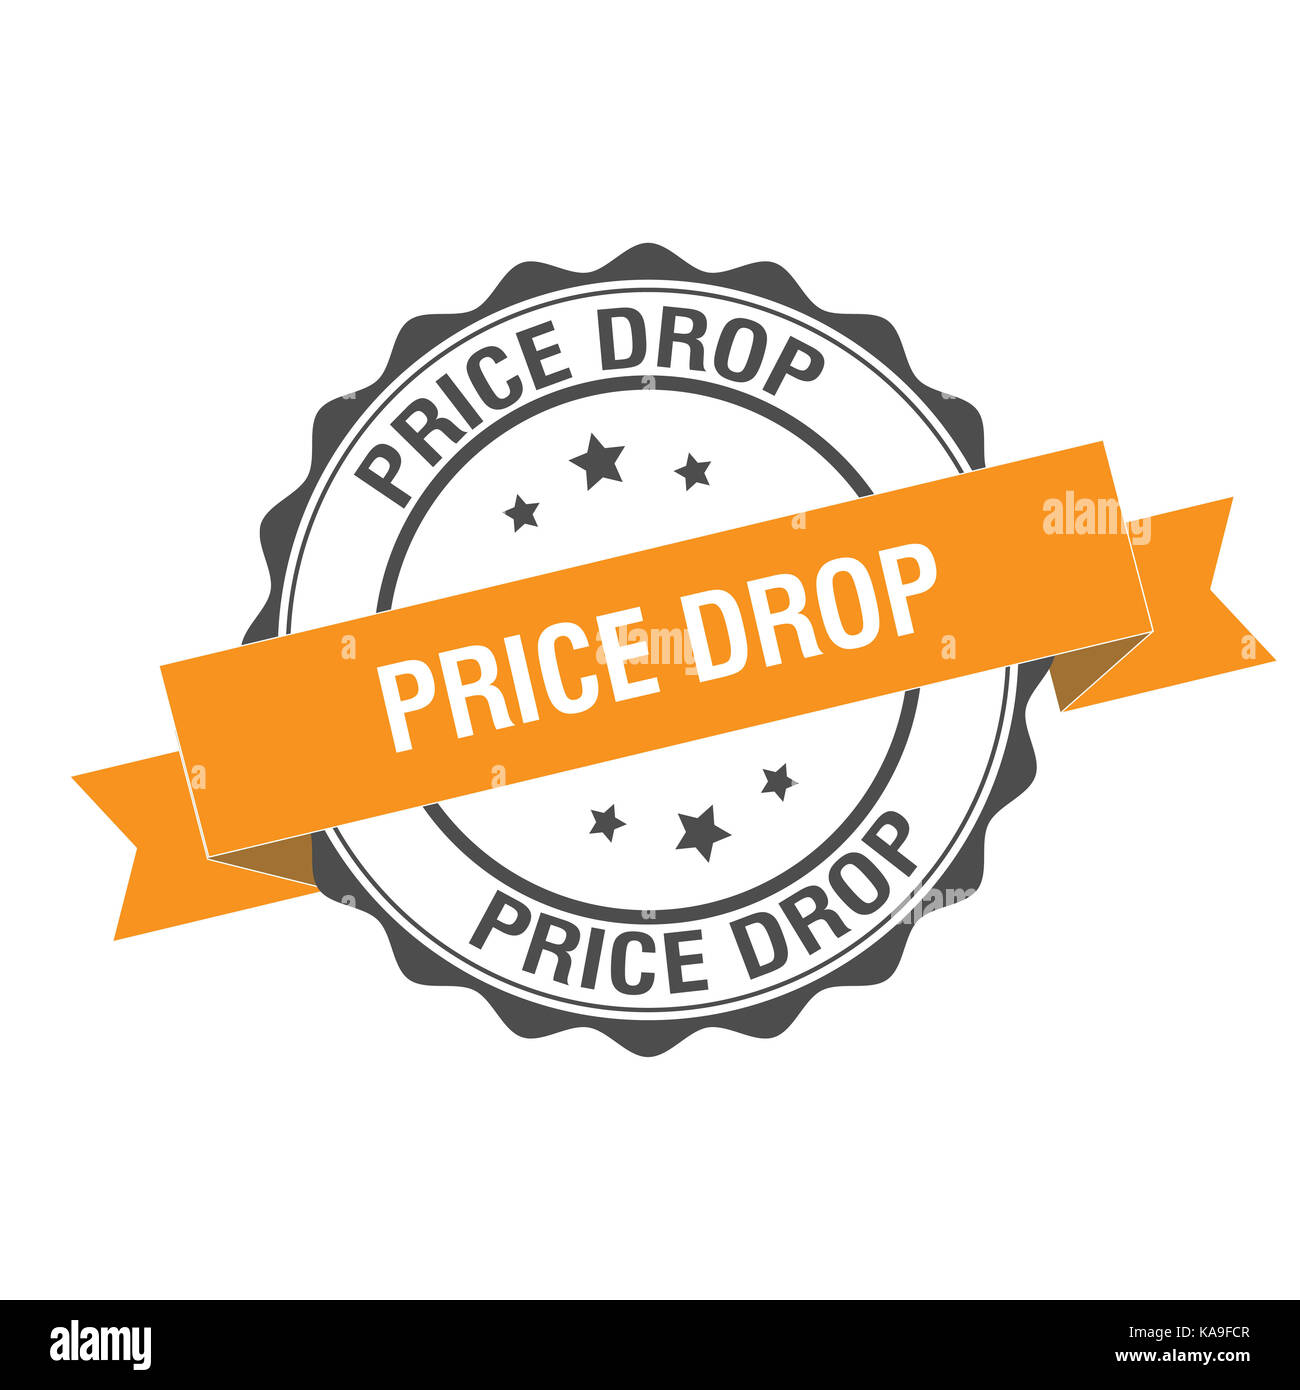 Price drop stamp illustration Stock Photo